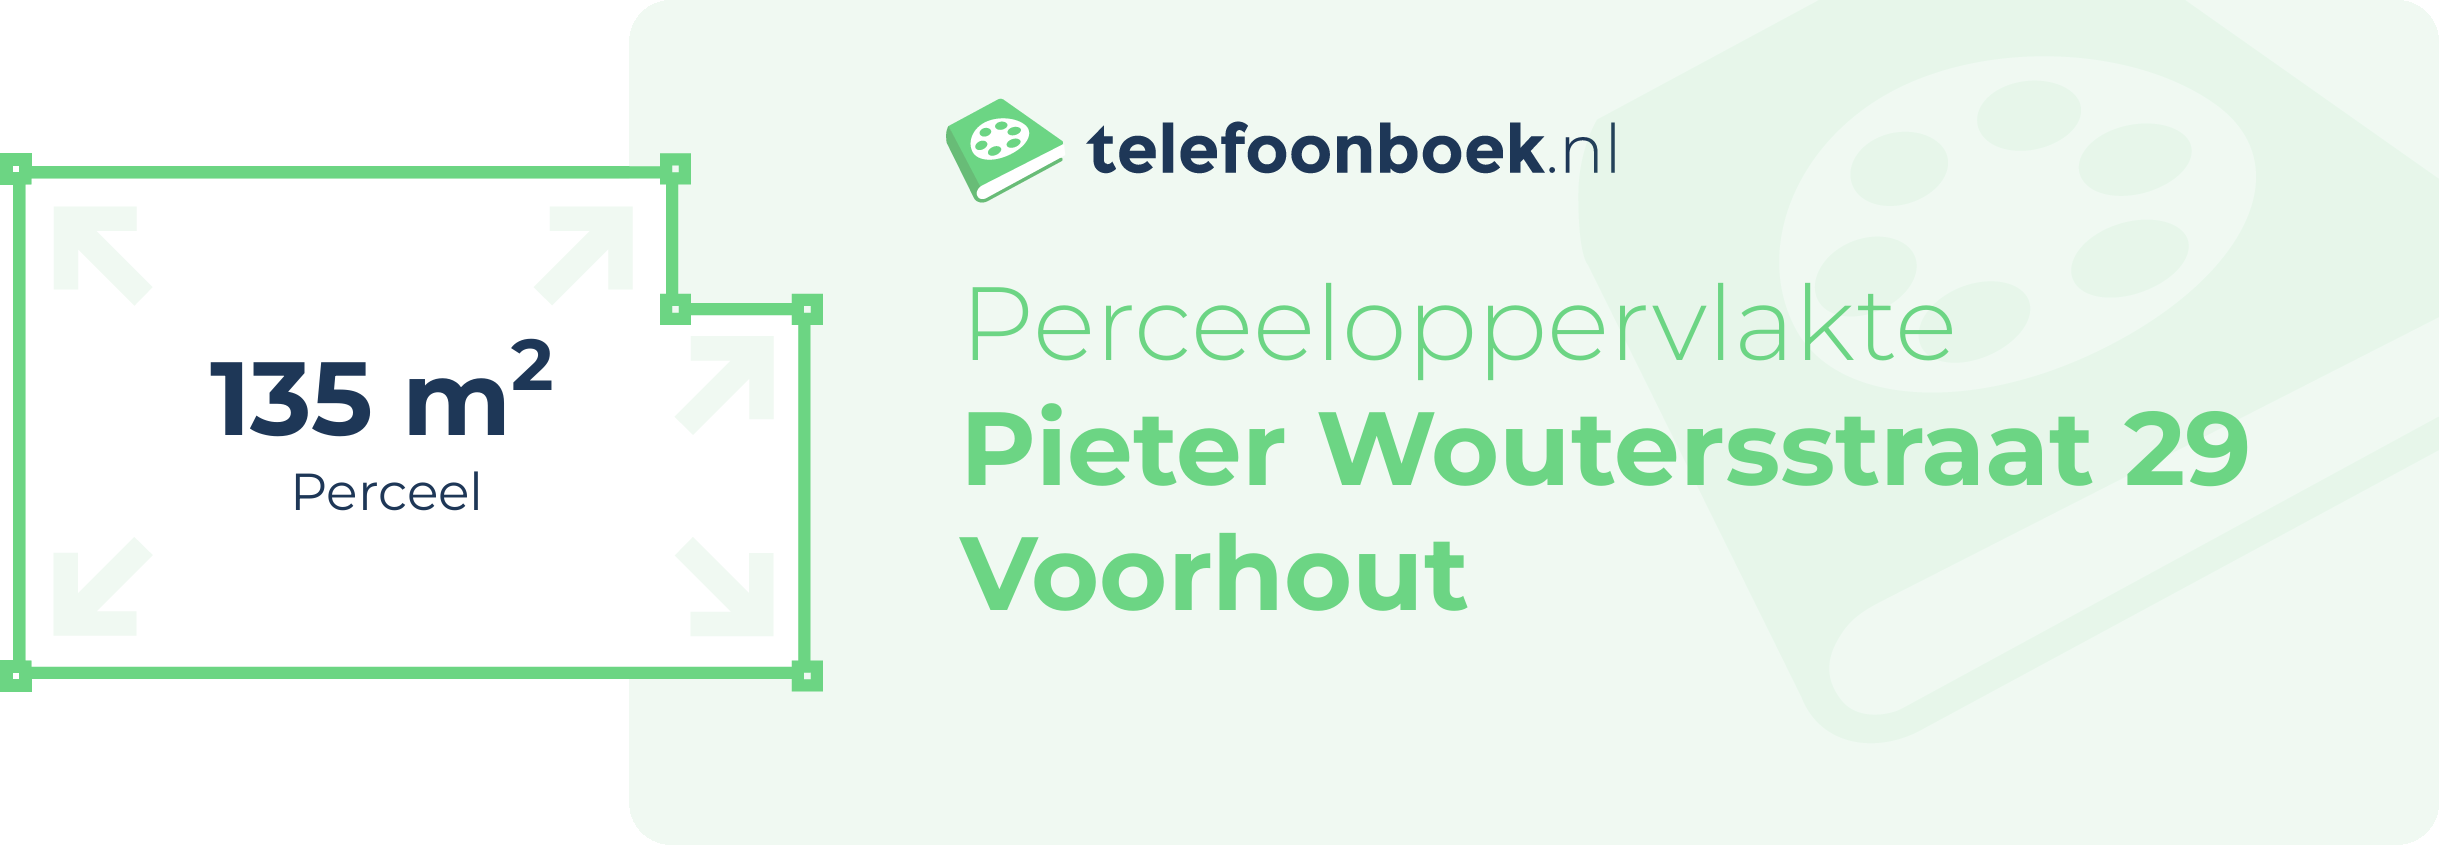 Perceeloppervlakte Pieter Woutersstraat 29 Voorhout